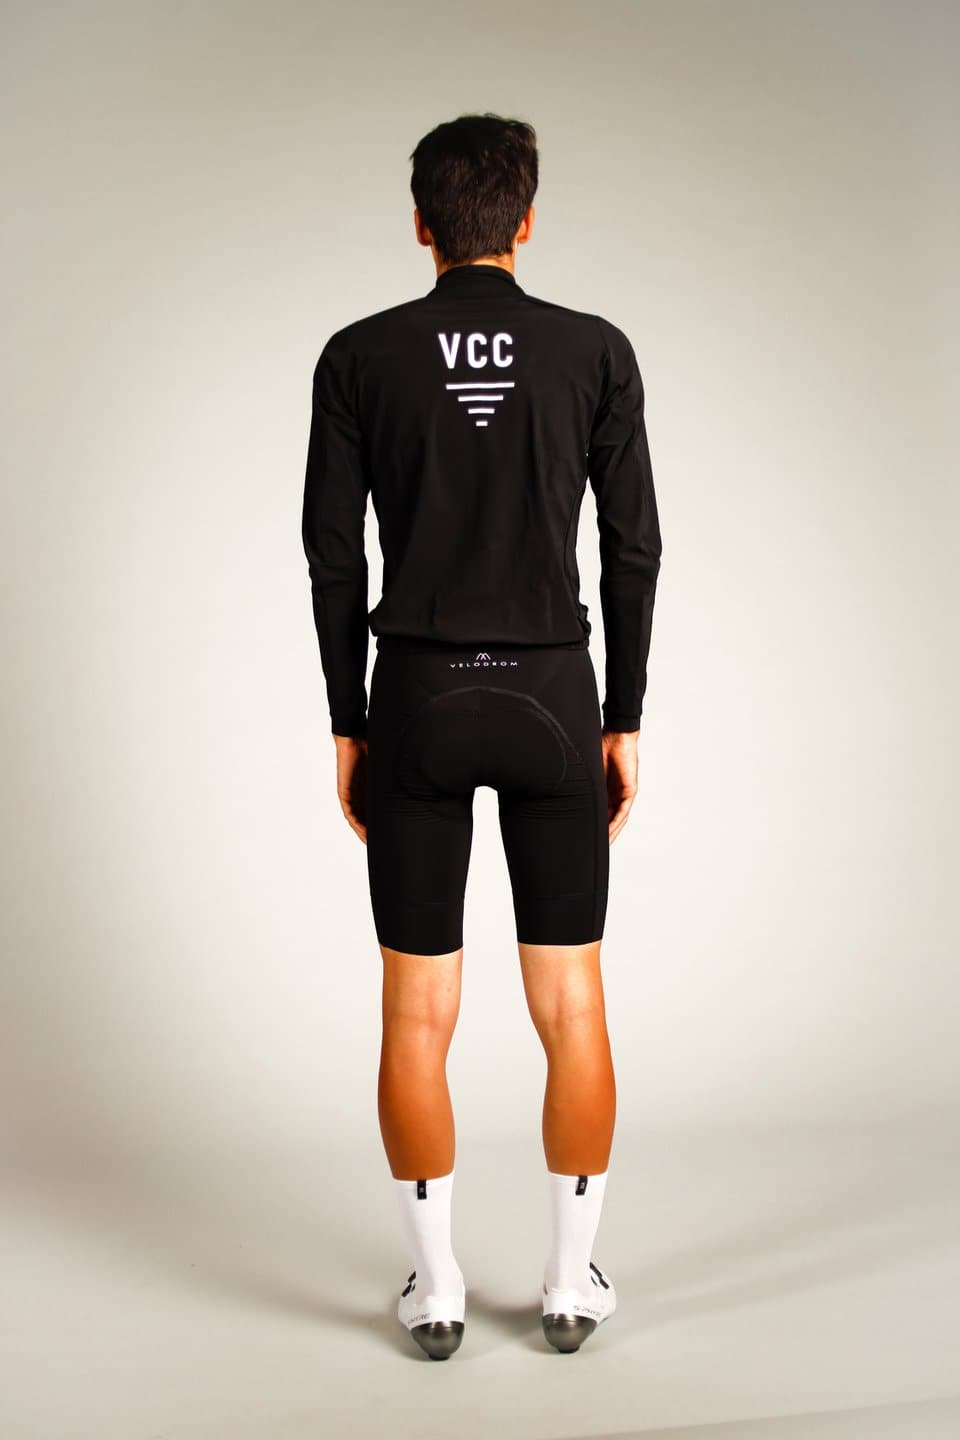 VELODROM VCC Drifter Jacket - Black